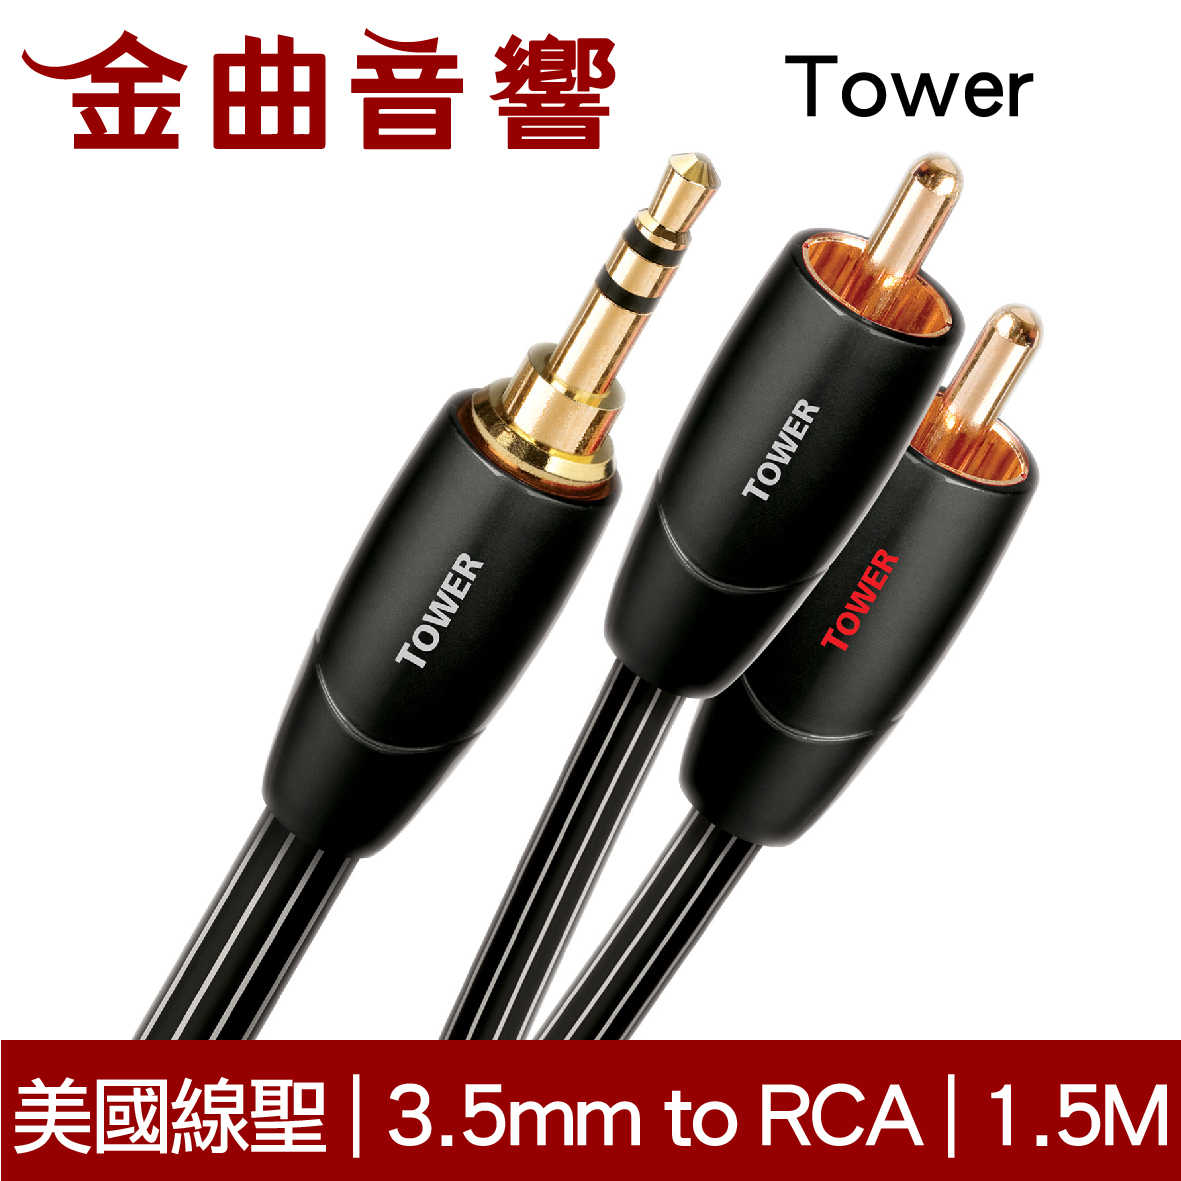 Audioquest 美國線聖 Tower 3.5mm to RCA 訊號線 1.5M | 金曲音響